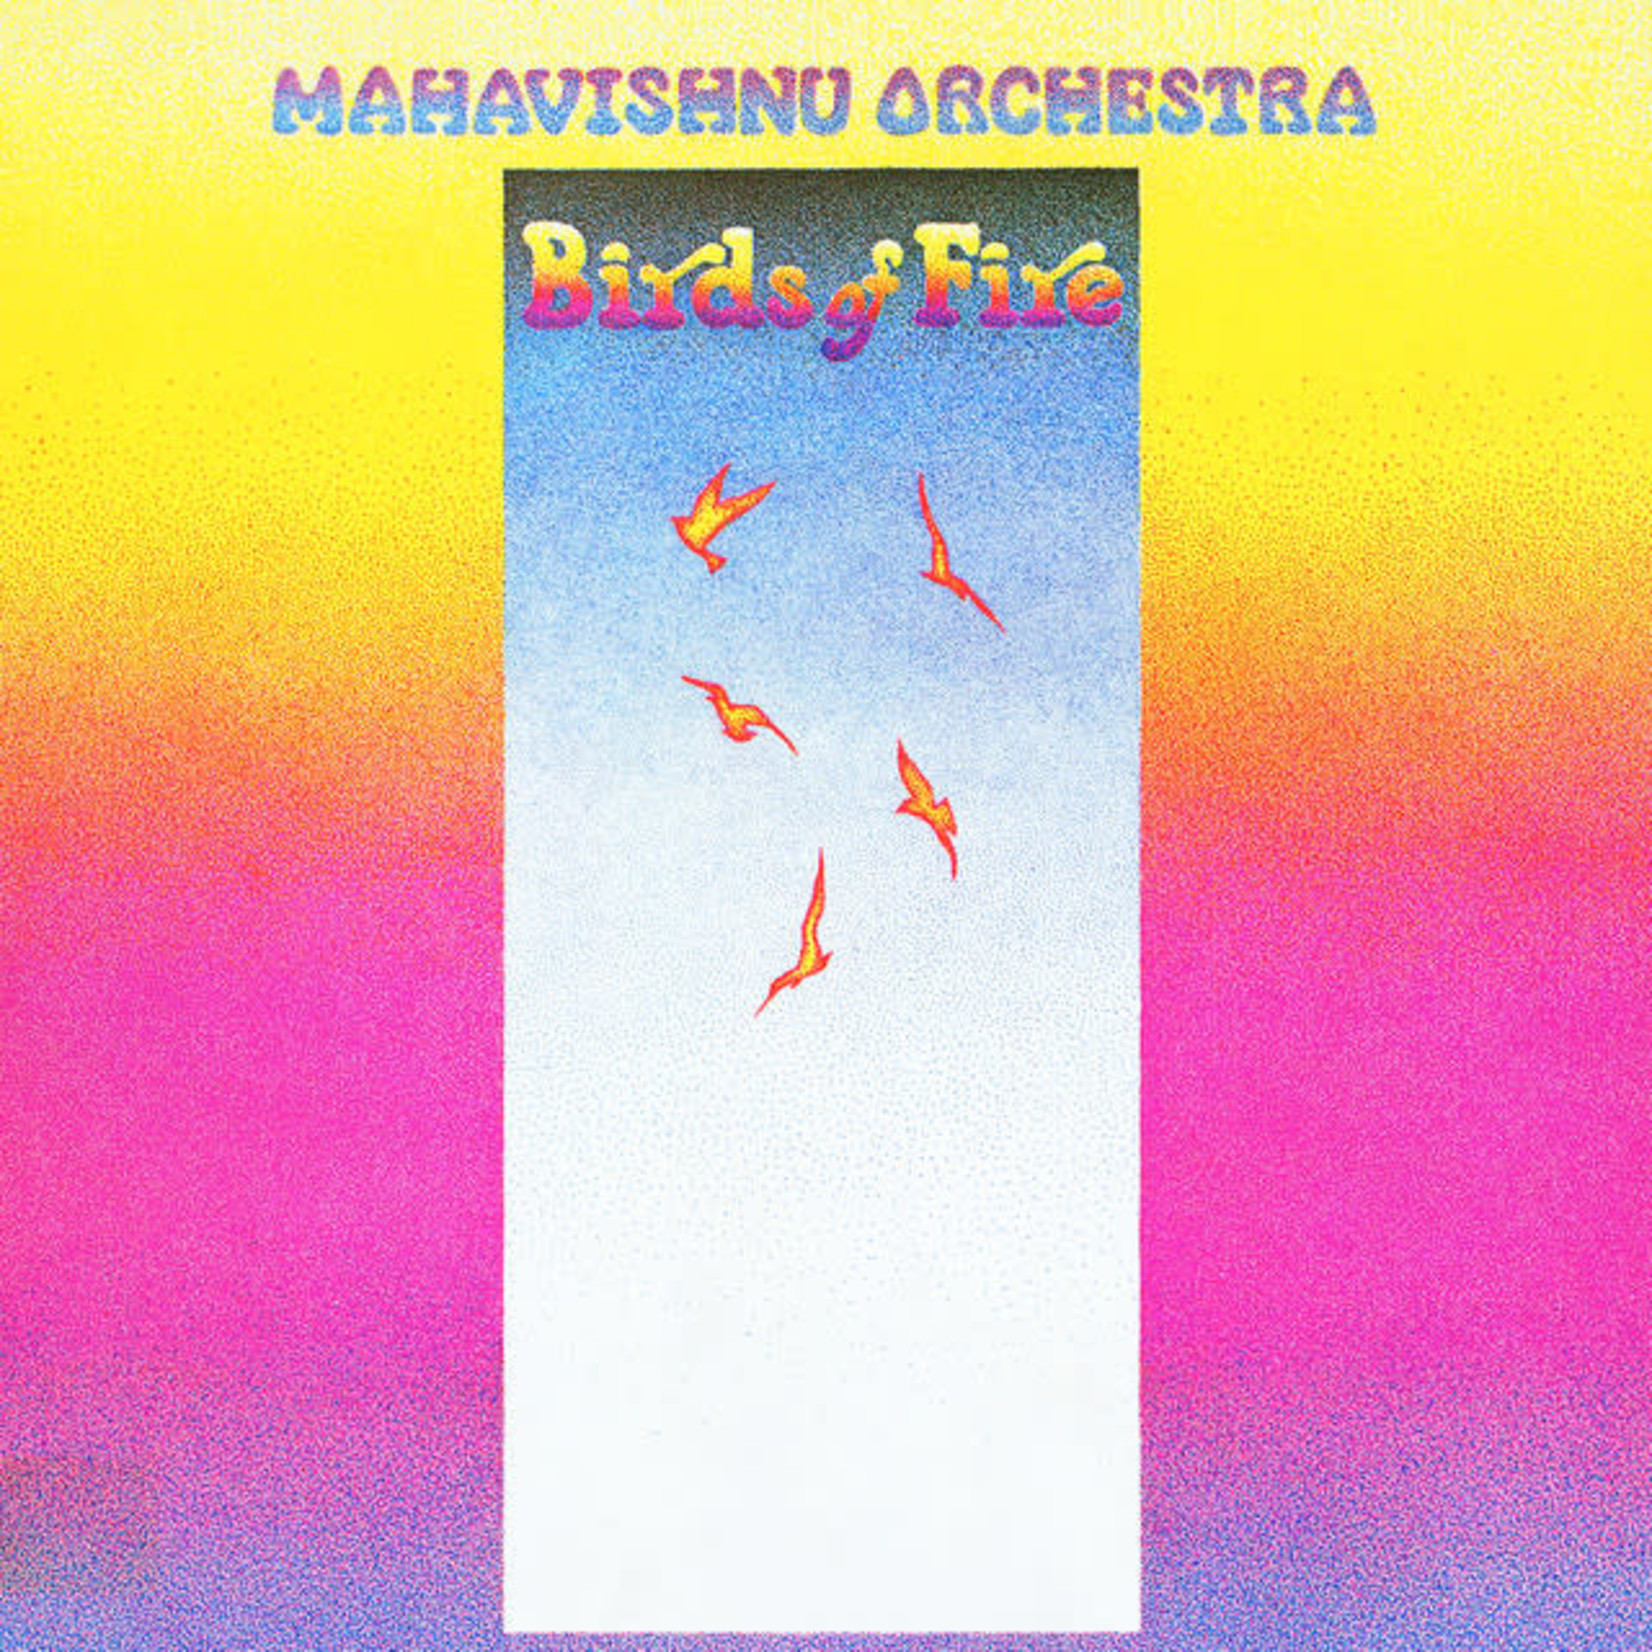 Vinyl Mahavishnu Orchestra - Birds of Fire